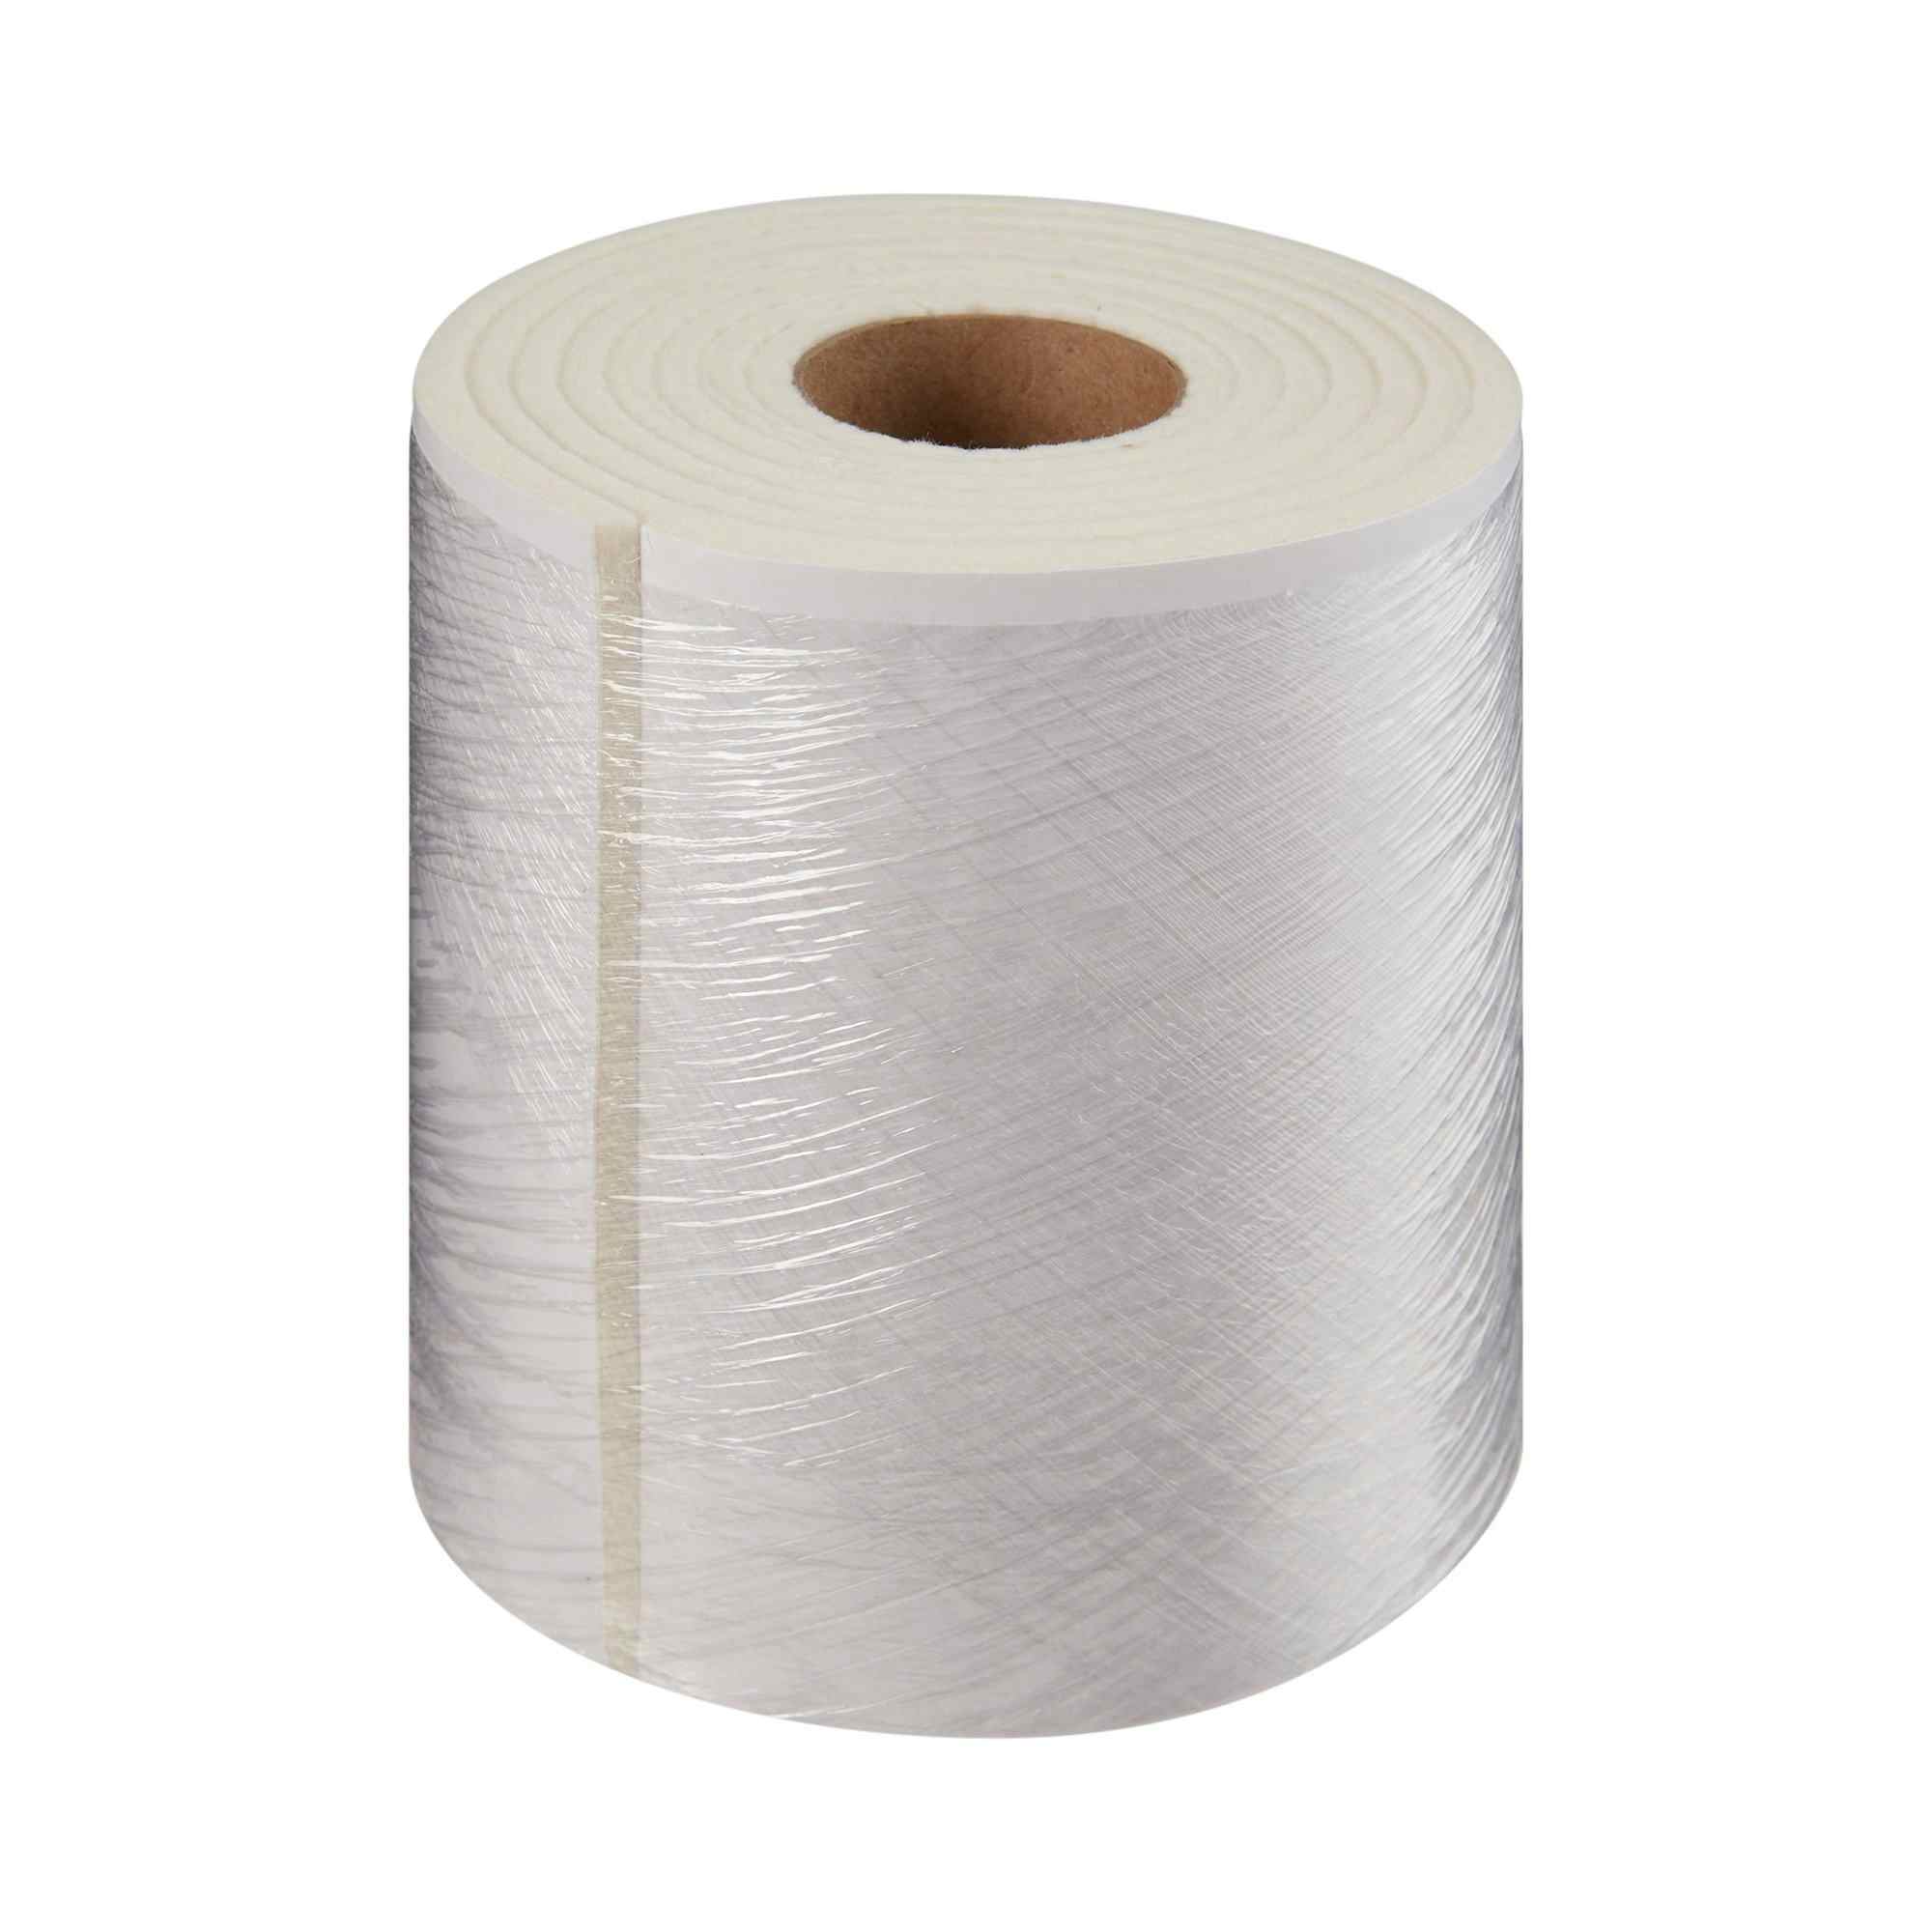 McKesson White Wool/Rayon Adhesive Orthopedic Felt Roll, 6" x 2.5 yd, 9229, 1 Roll